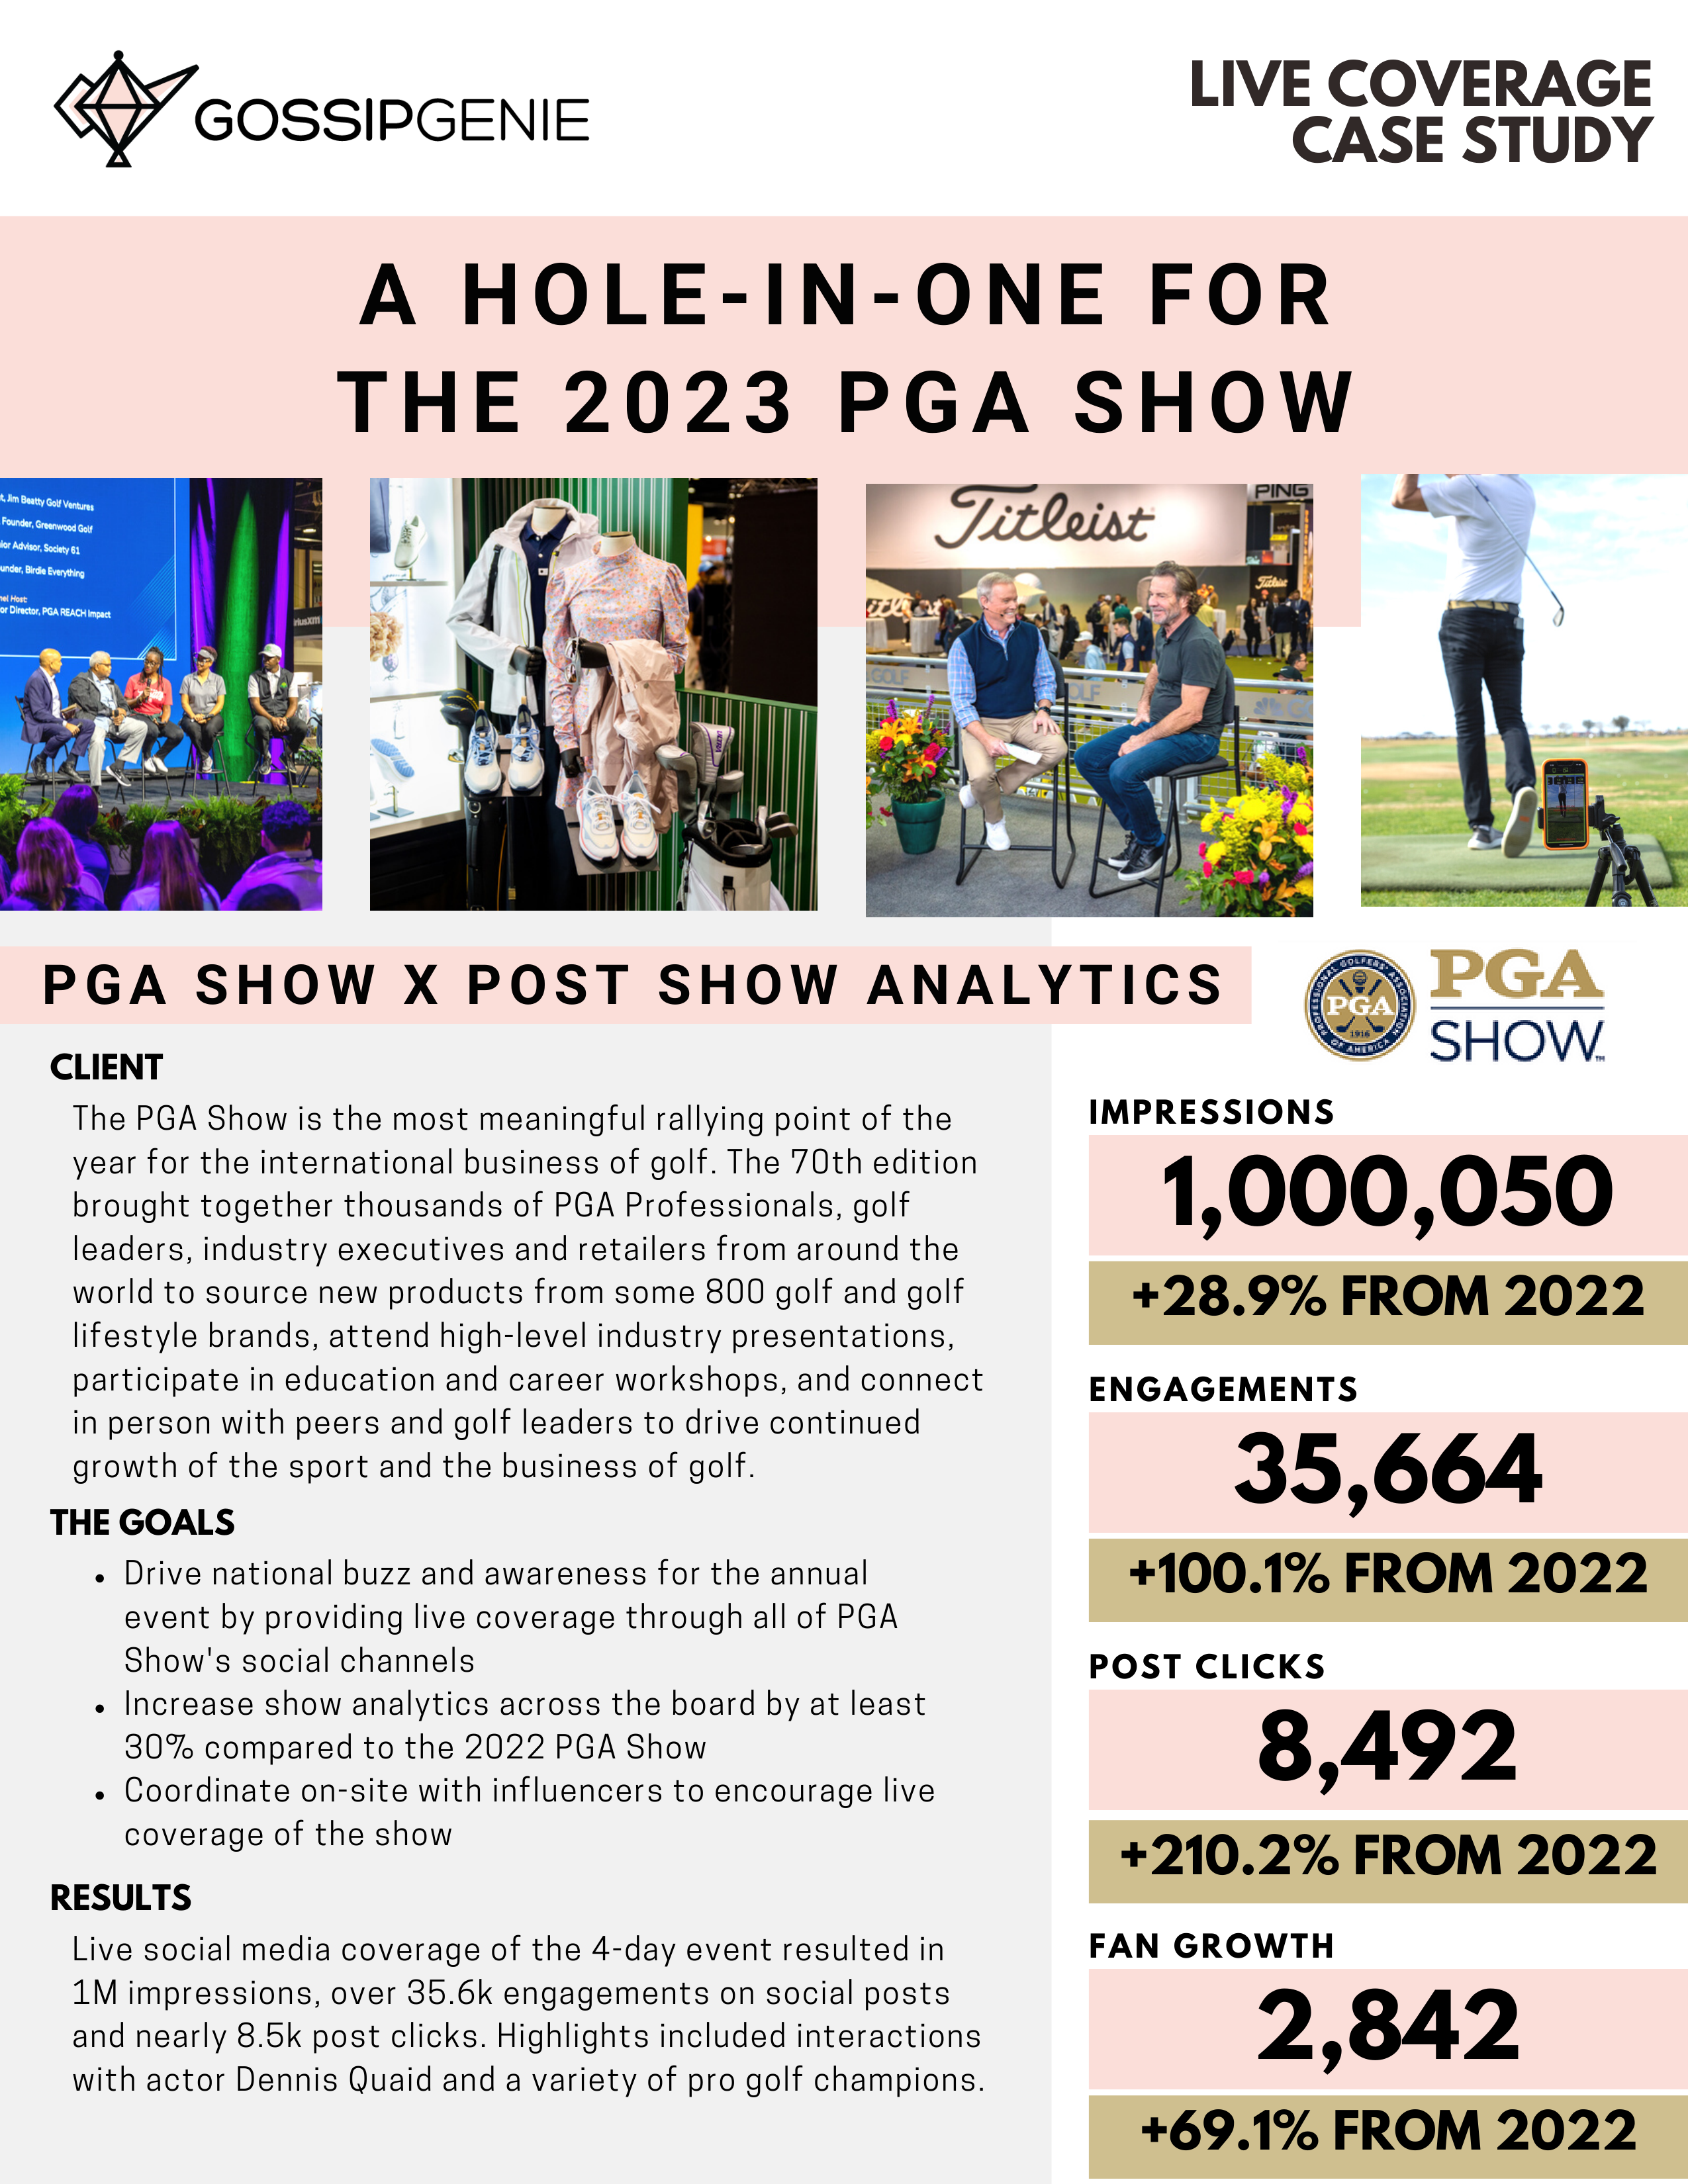 PGA Live Show Case Study